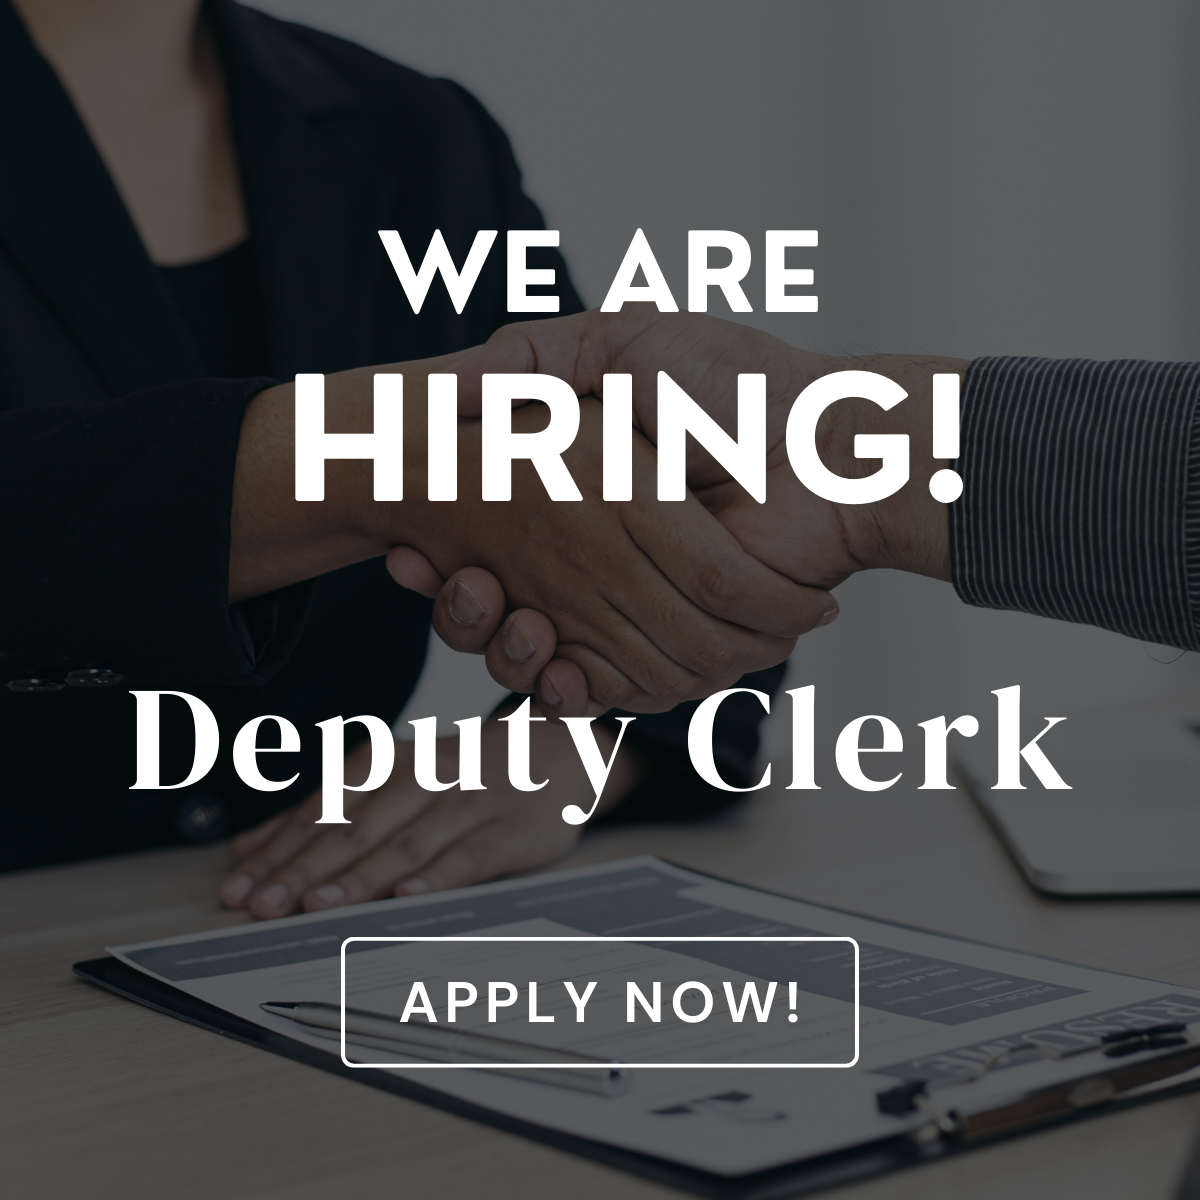 We’re Hiring for a Deputy Clerk!